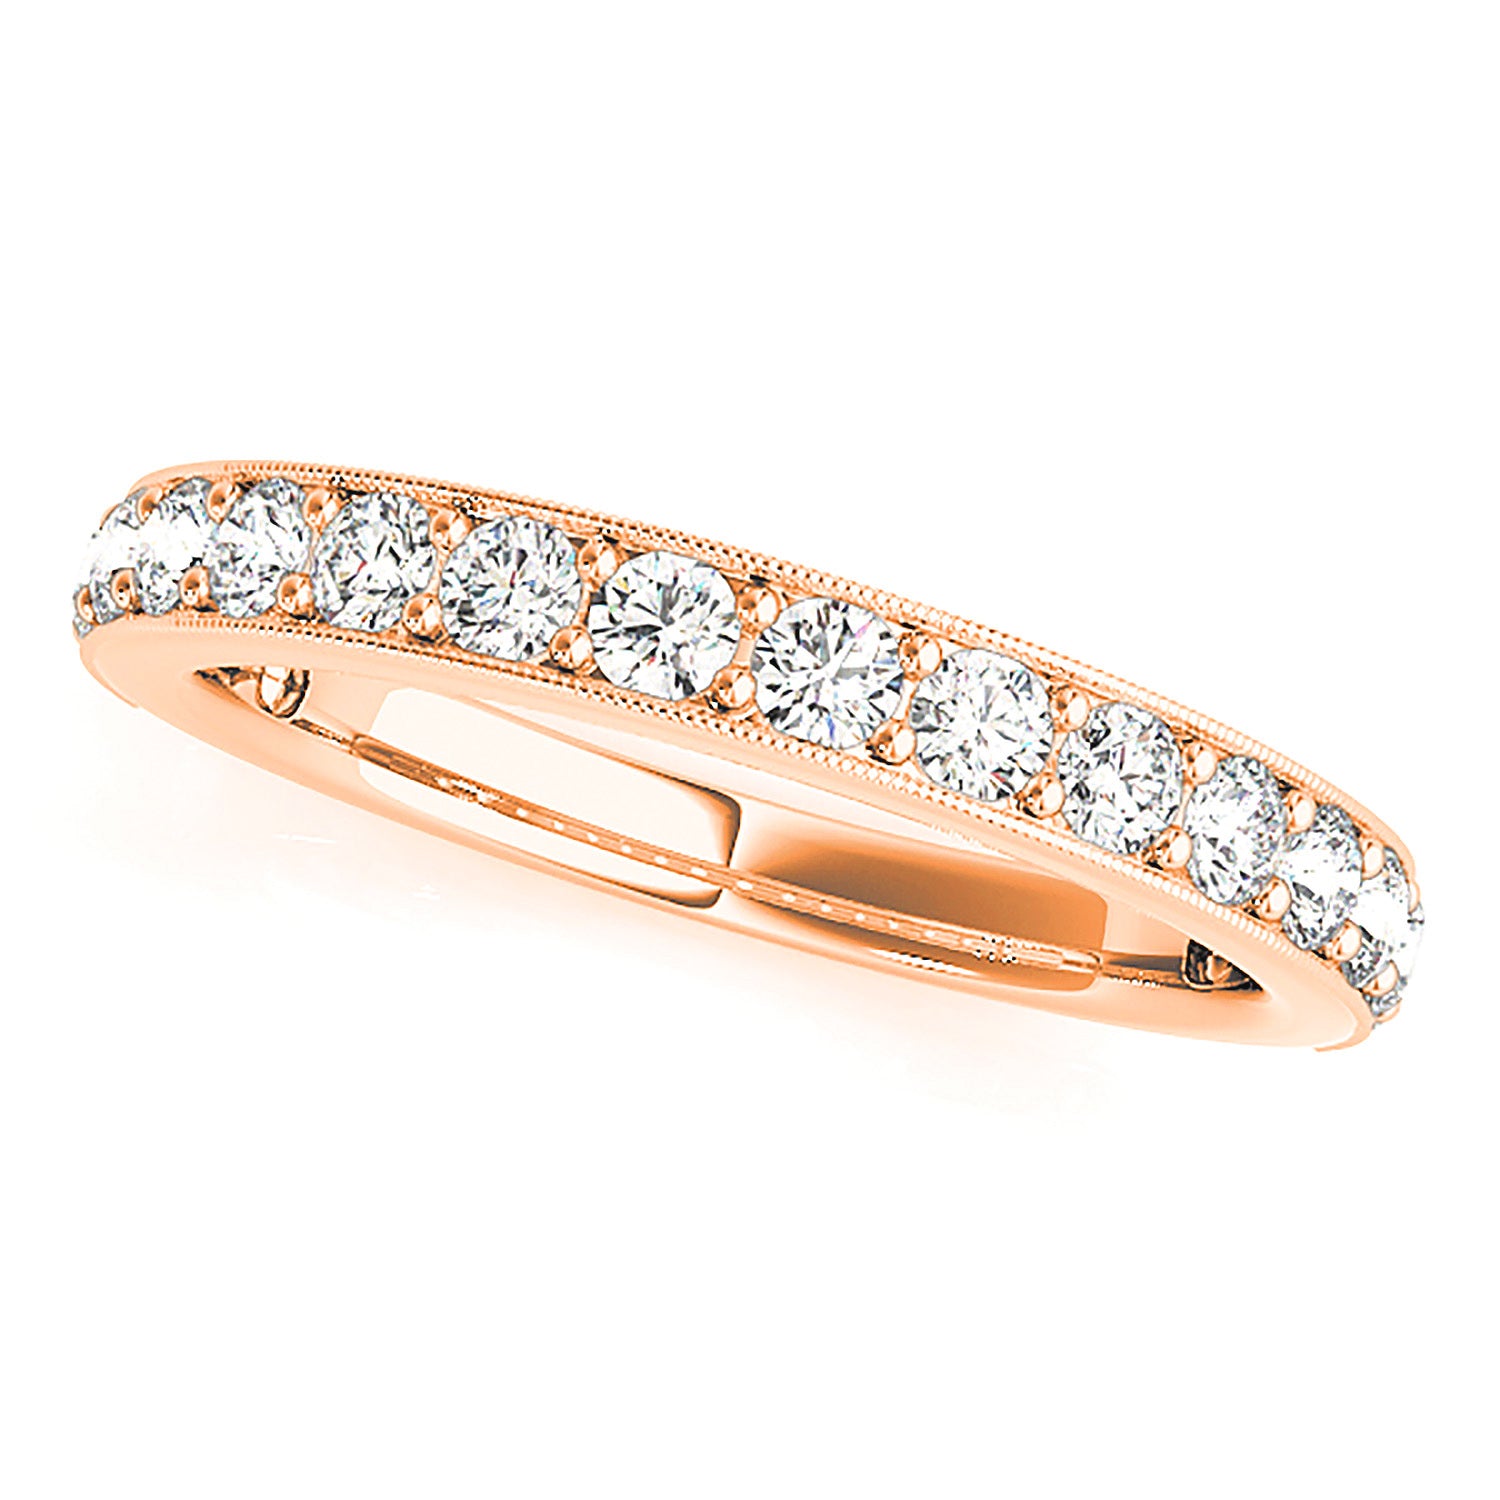 Diamond Wedding Band - 14K/18k Solid White Gold / Platinum | Channel Set Diamond Wedding Anniversary Ring | Modern Design-in 14K/18K White, Yellow, Rose Gold and Platinum - Christmas Jewelry Gift -VIRABYANI